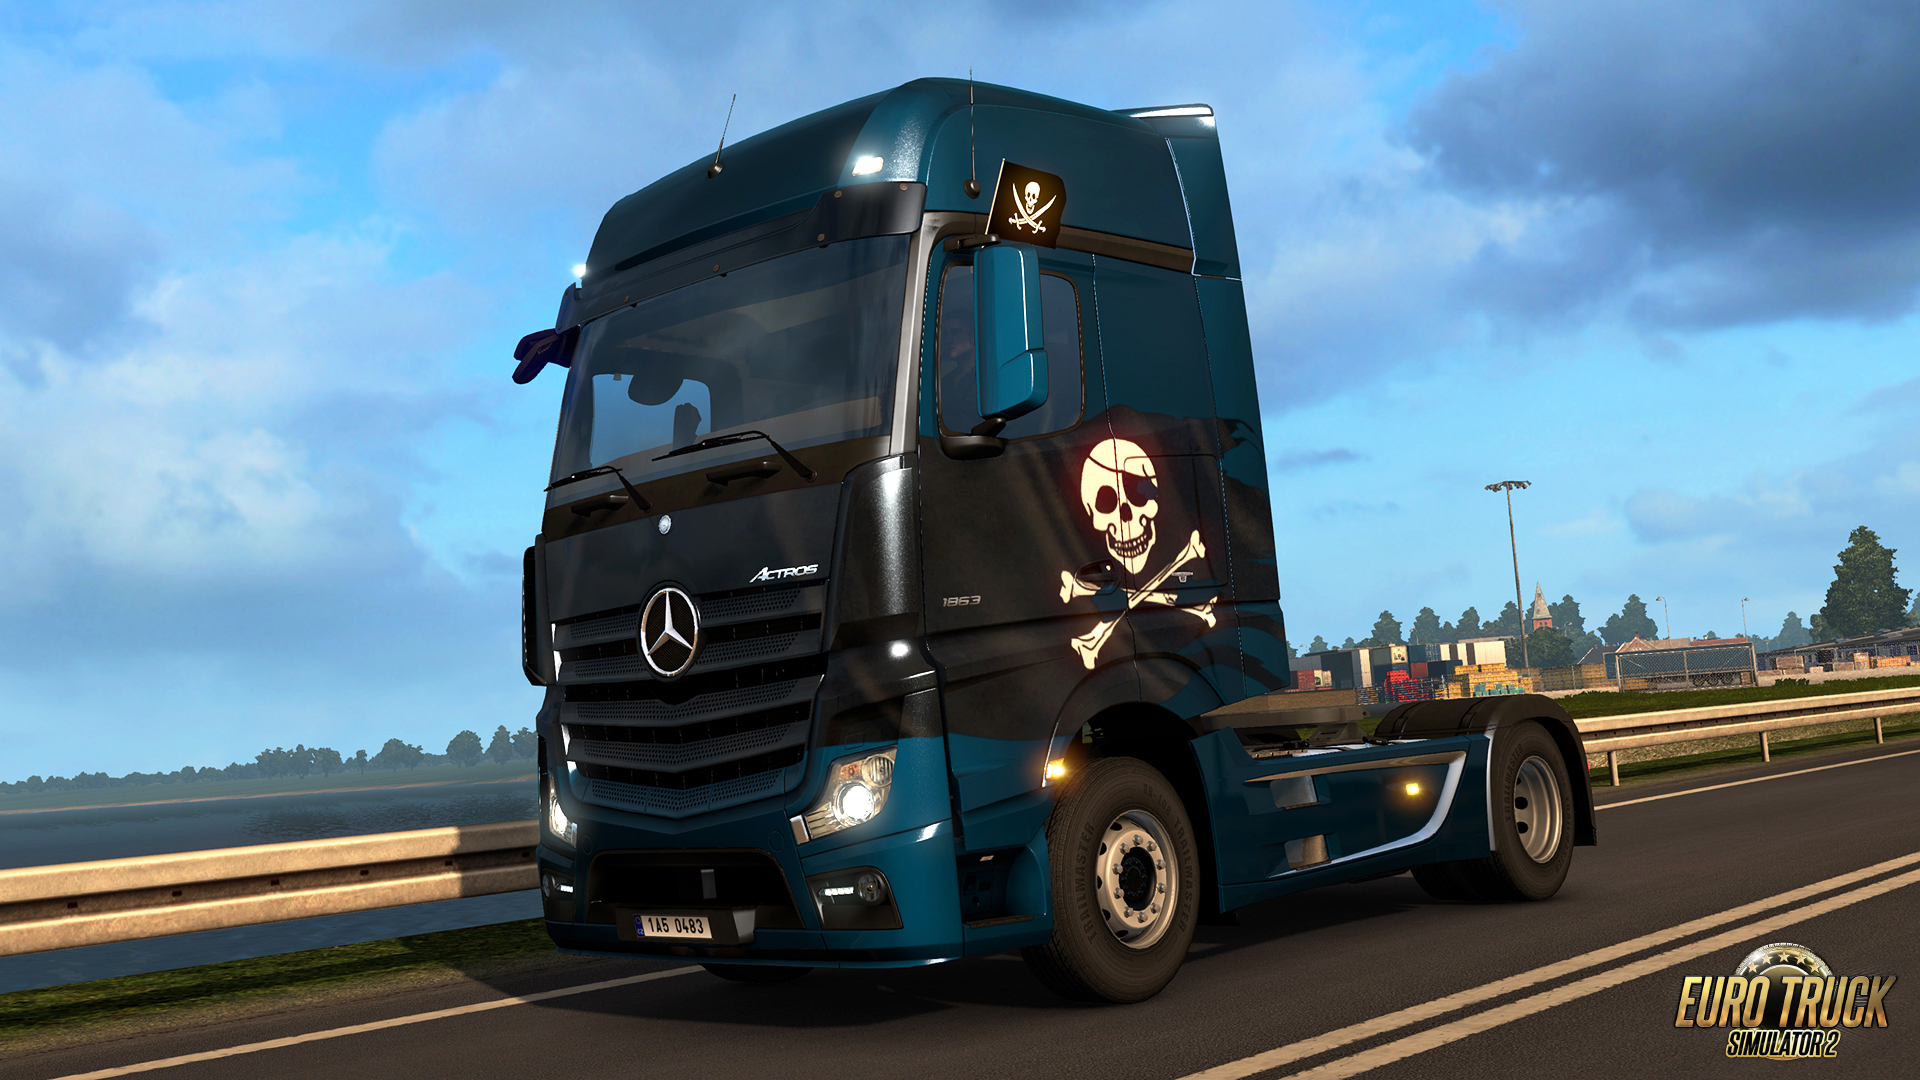 Euro truck simulator 2 free download